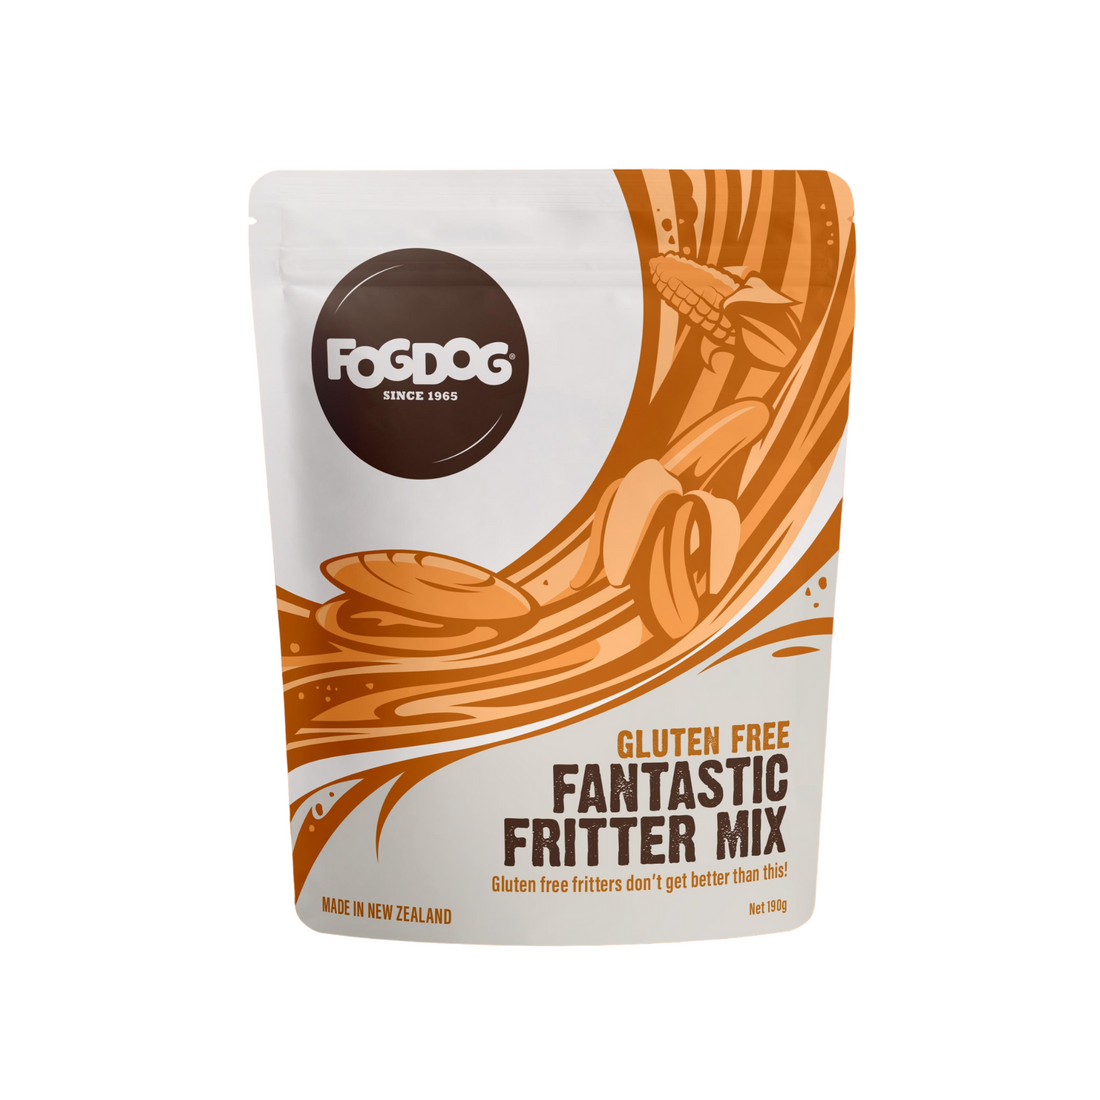 Fogdog Gluten Free Fantastic Fritter Mix